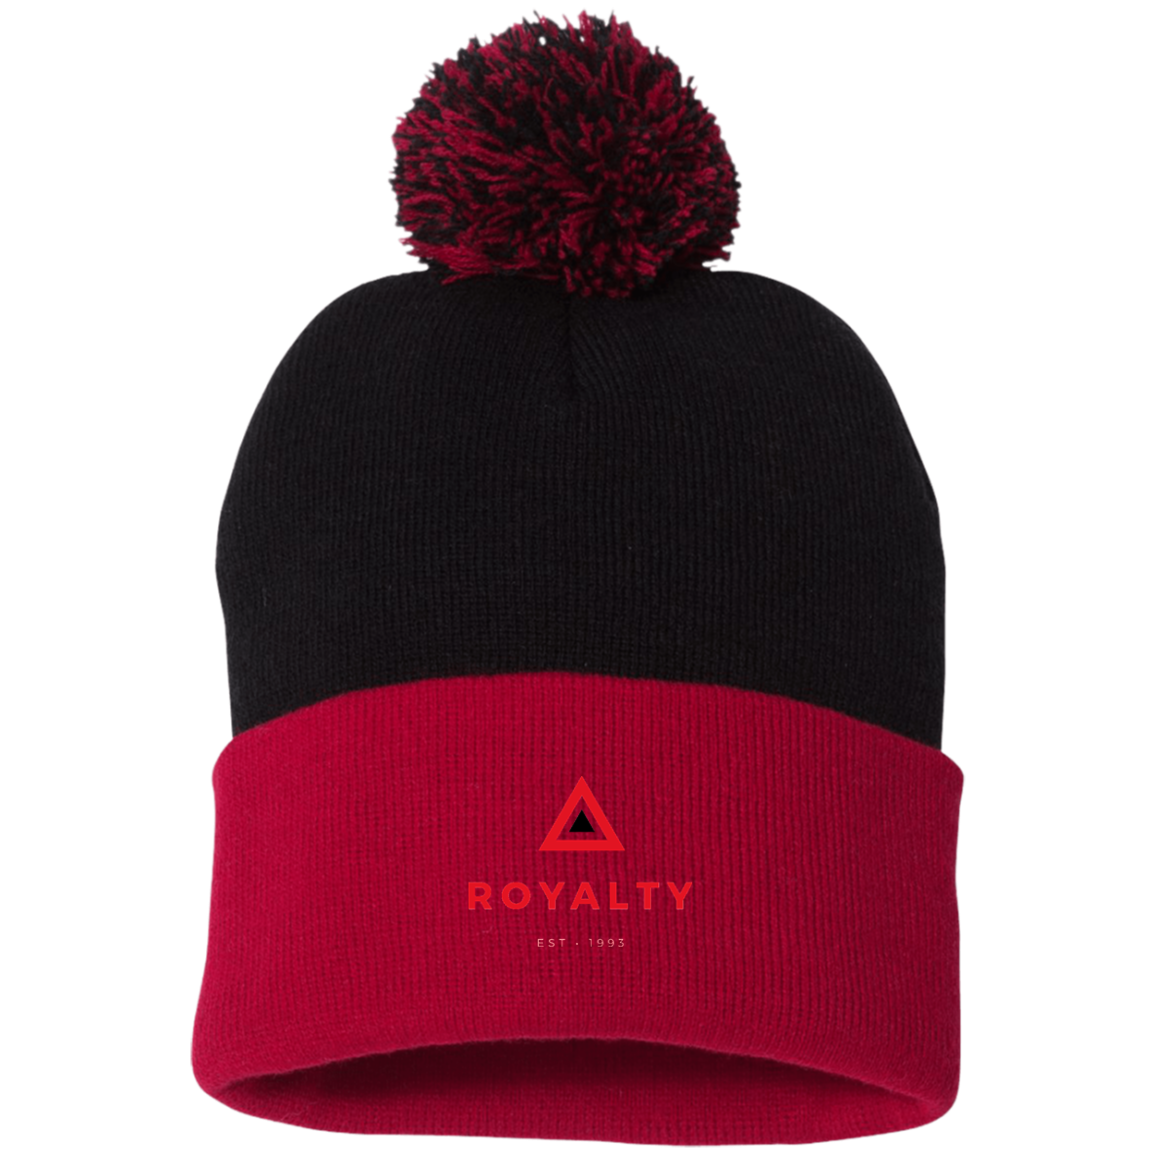 Royalty Pom Pom Knit Cap